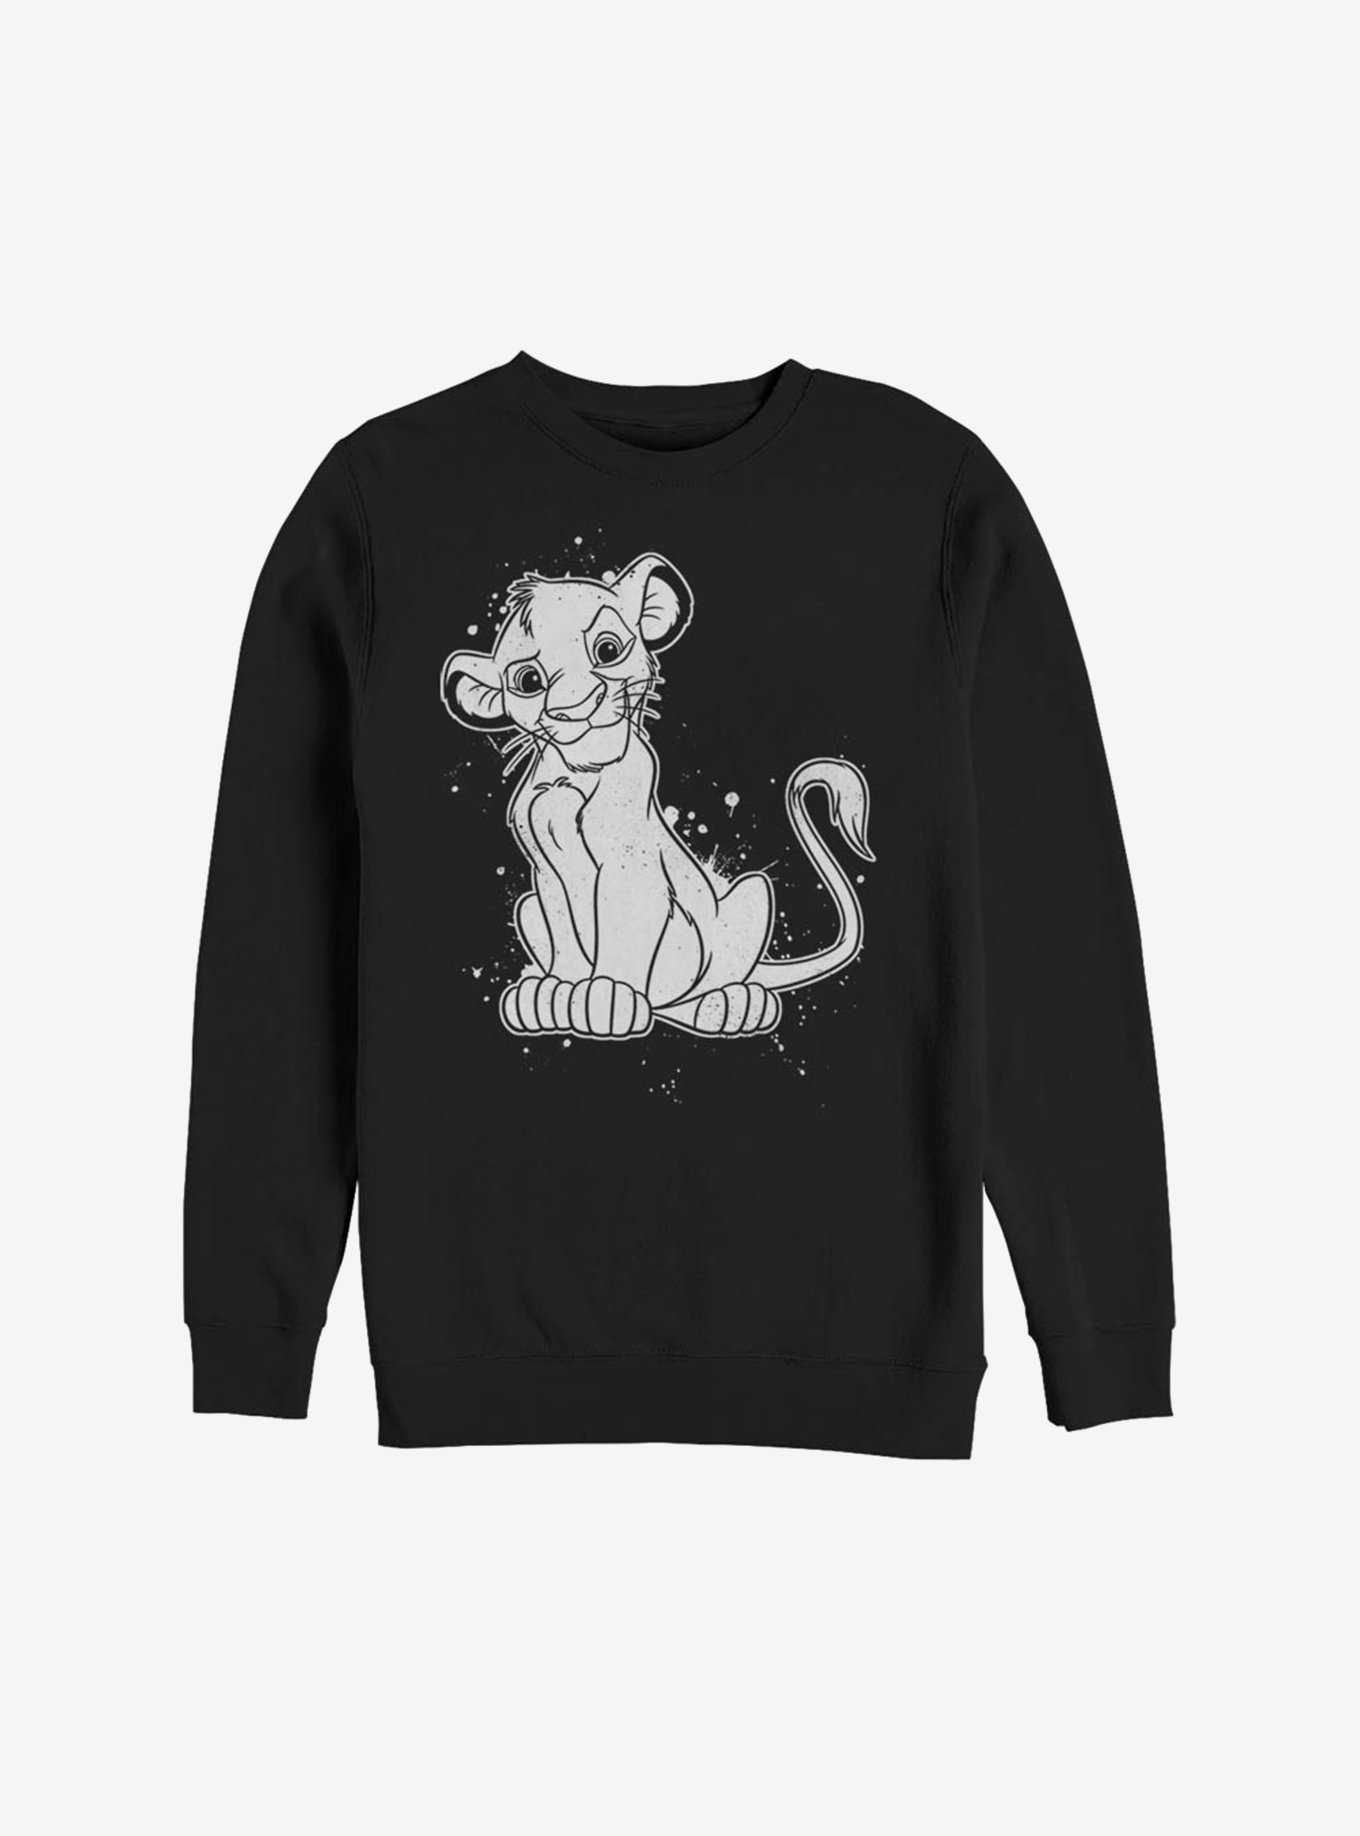 Disney The Lion King Young Simba Sweatshirt, , hi-res